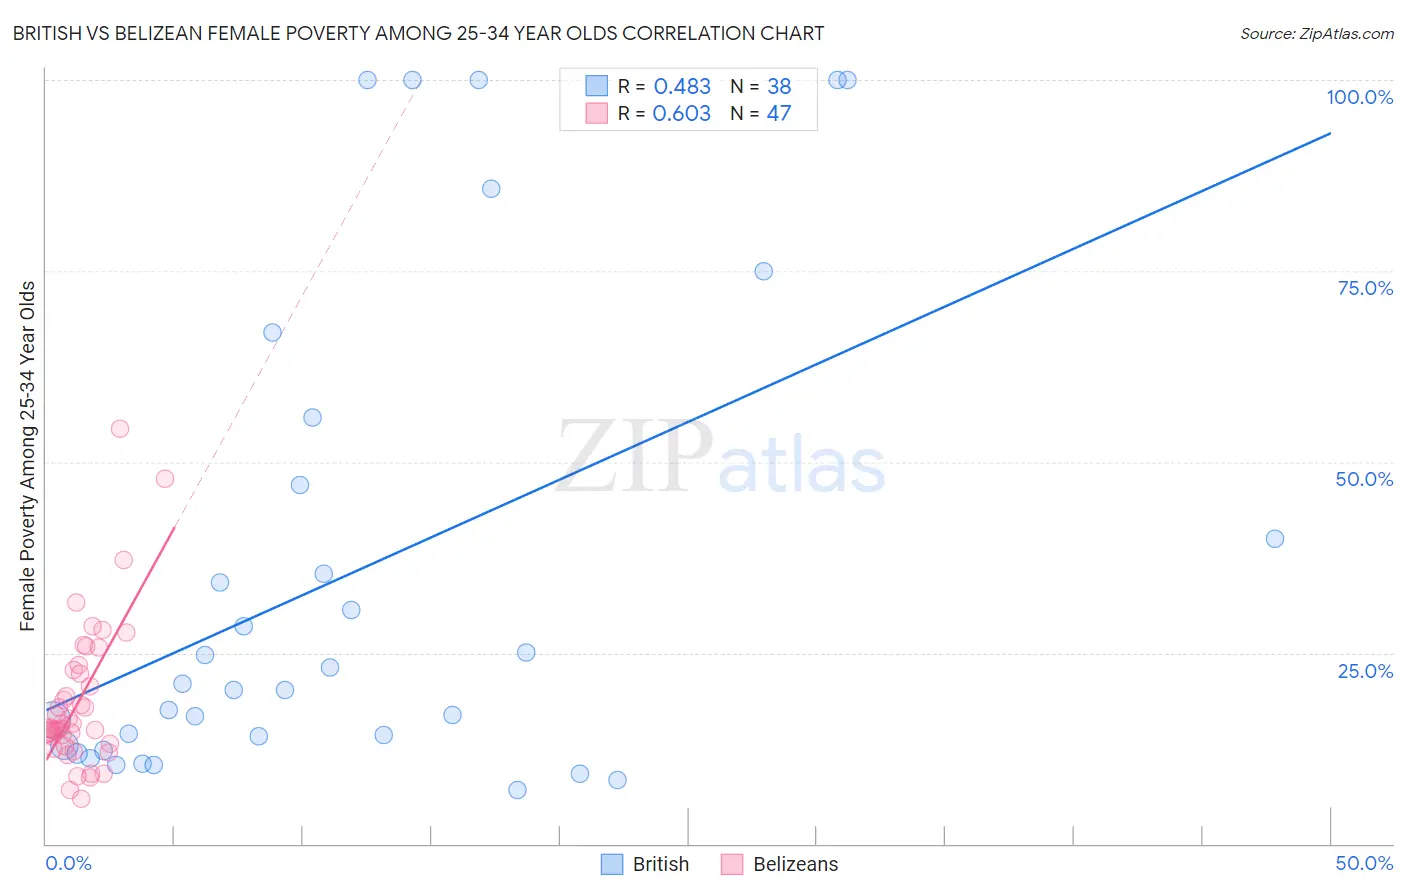 British vs Belizean Female Poverty Among 25-34 Year Olds